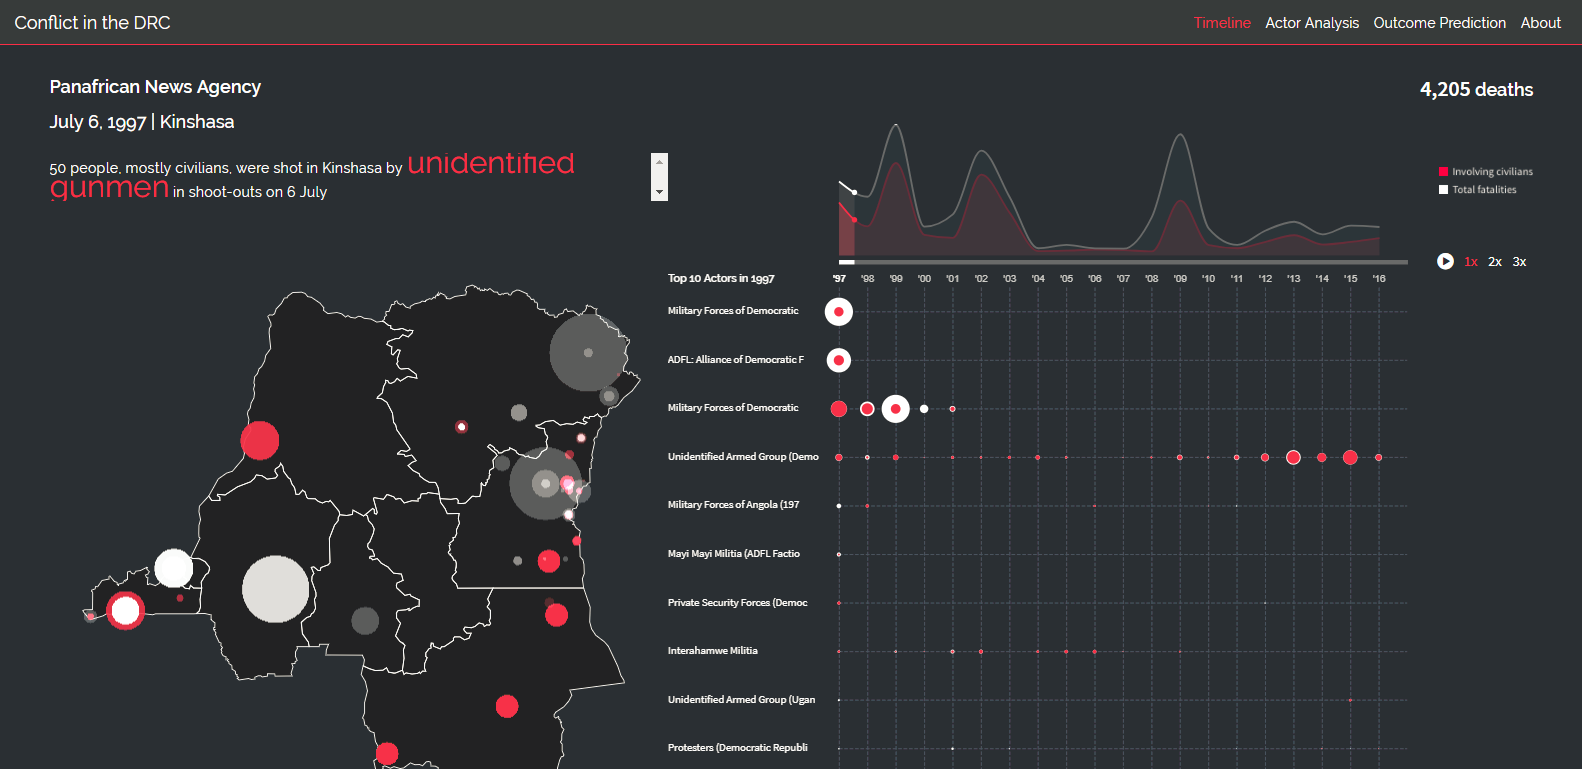 Democratic Republic of Congo Conflict Visualizations